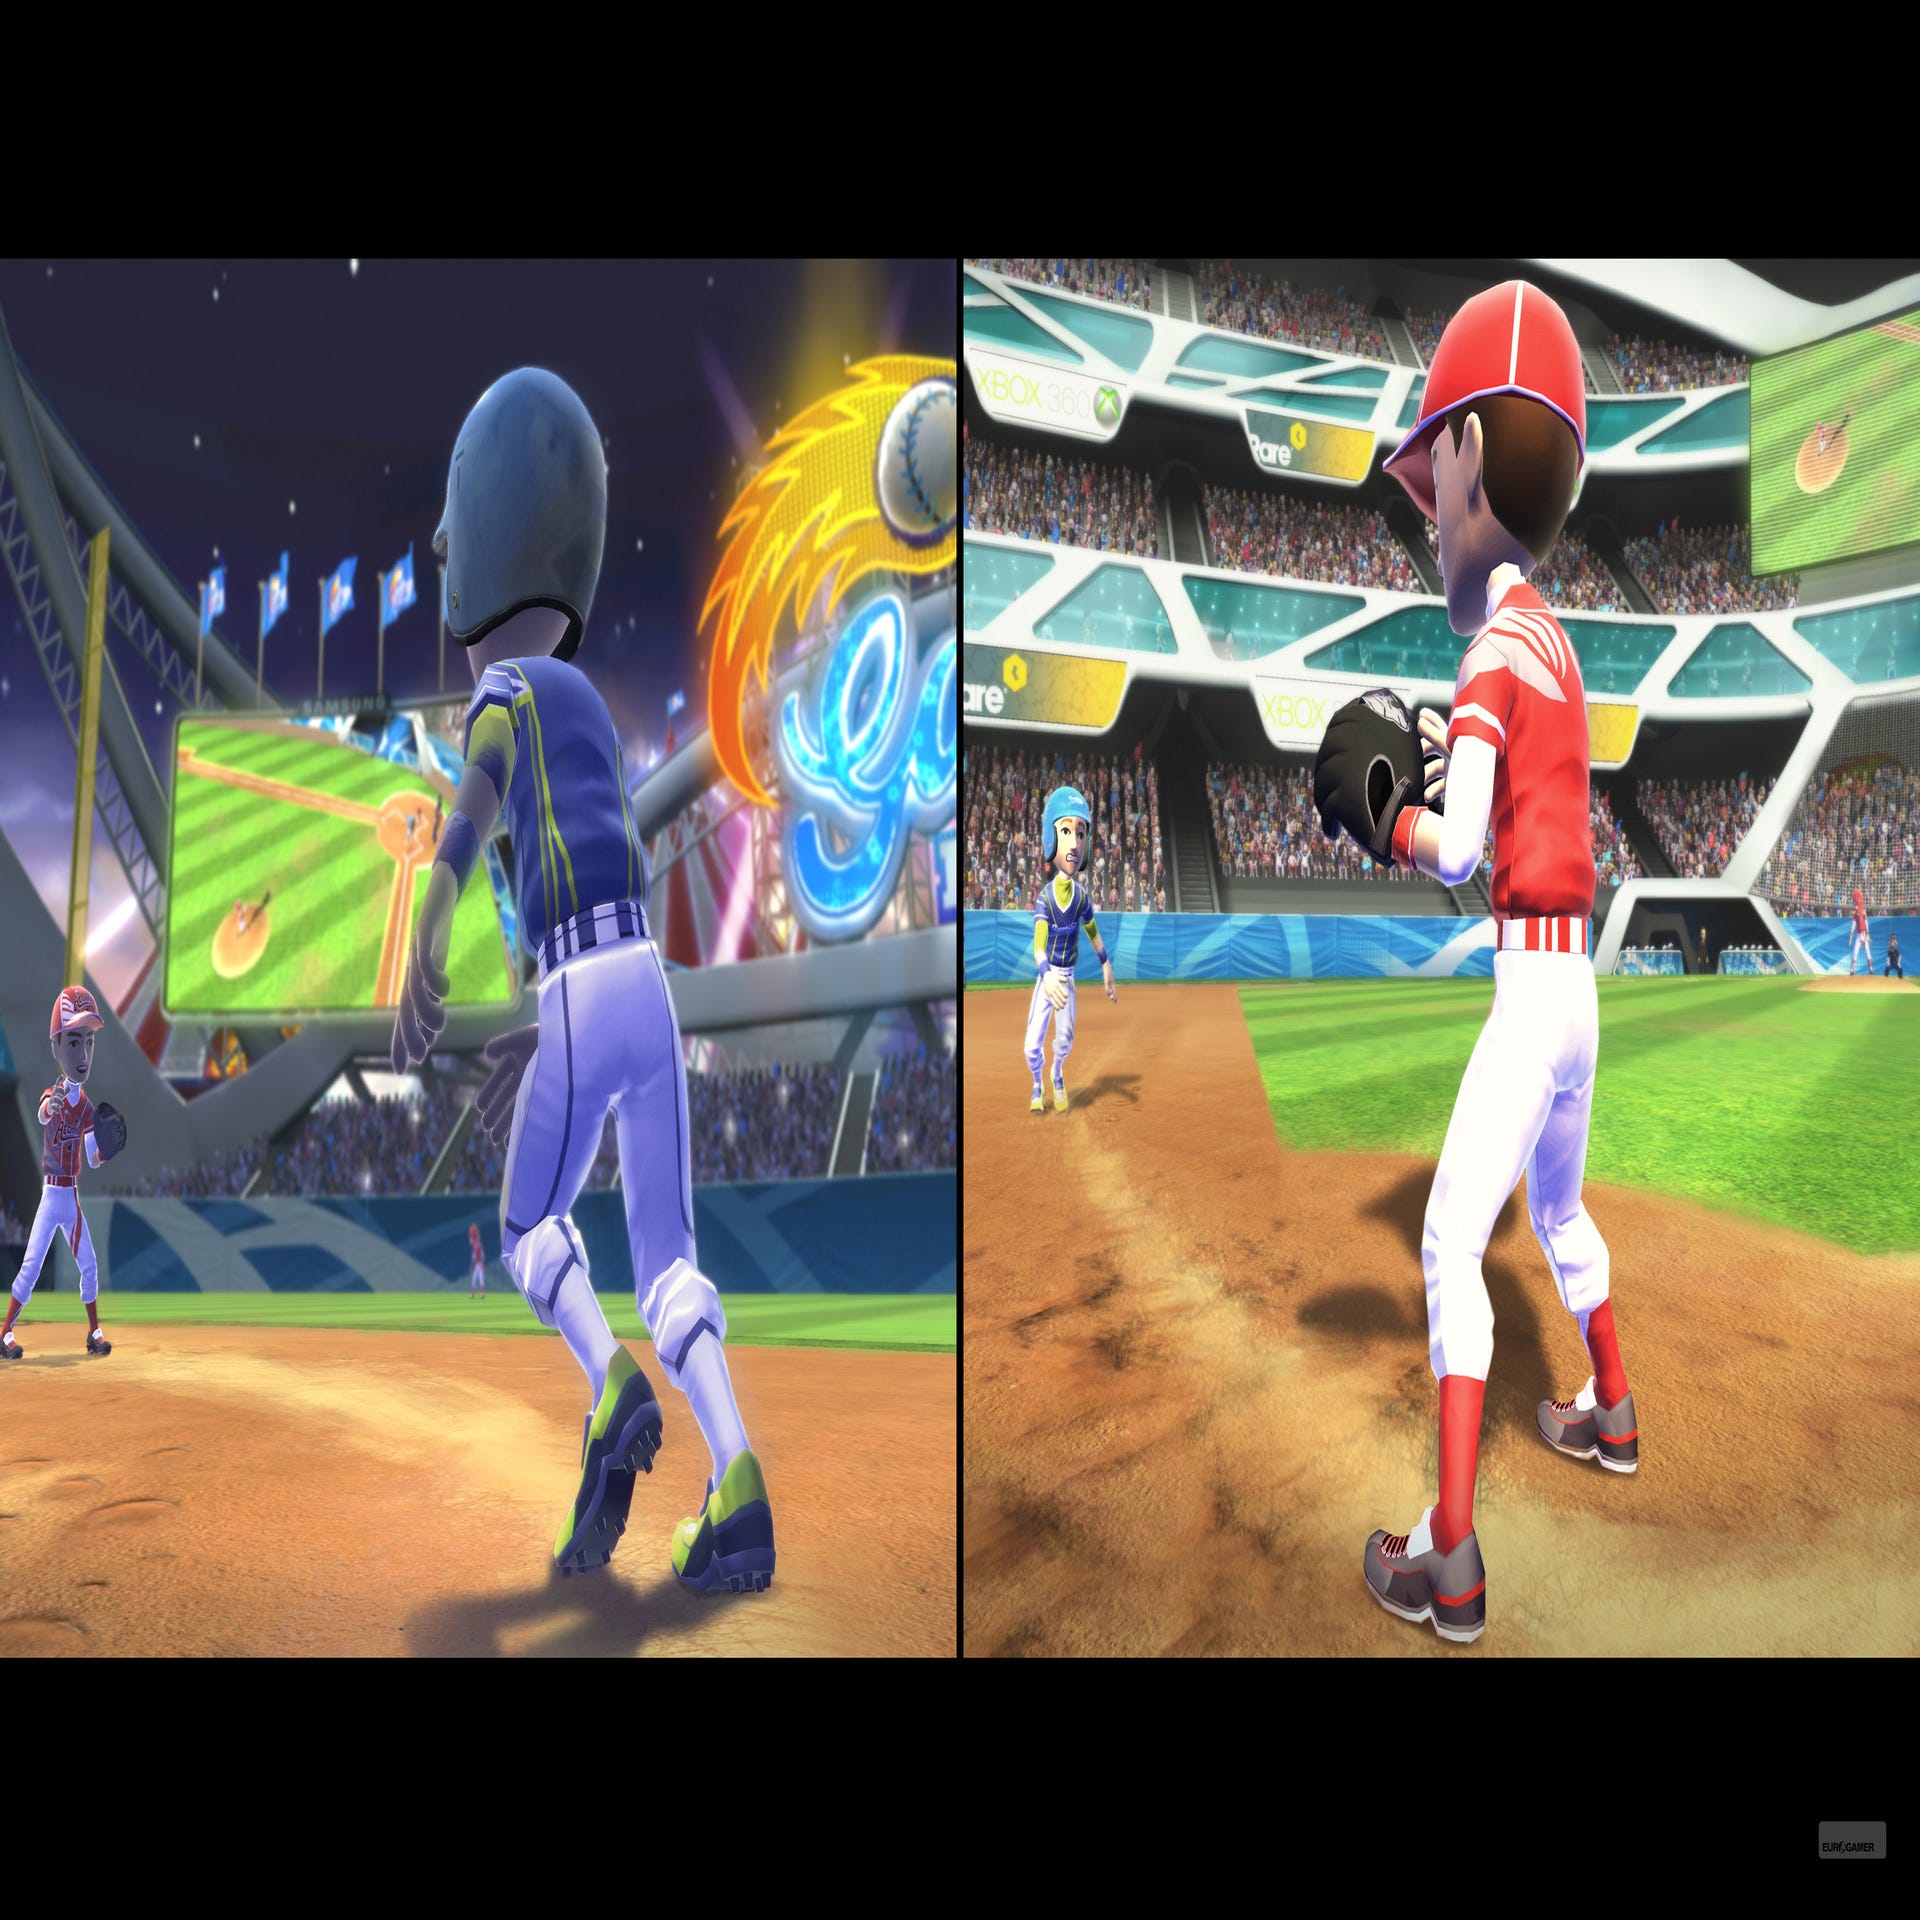  Kinect Sports Season Two : Video Games